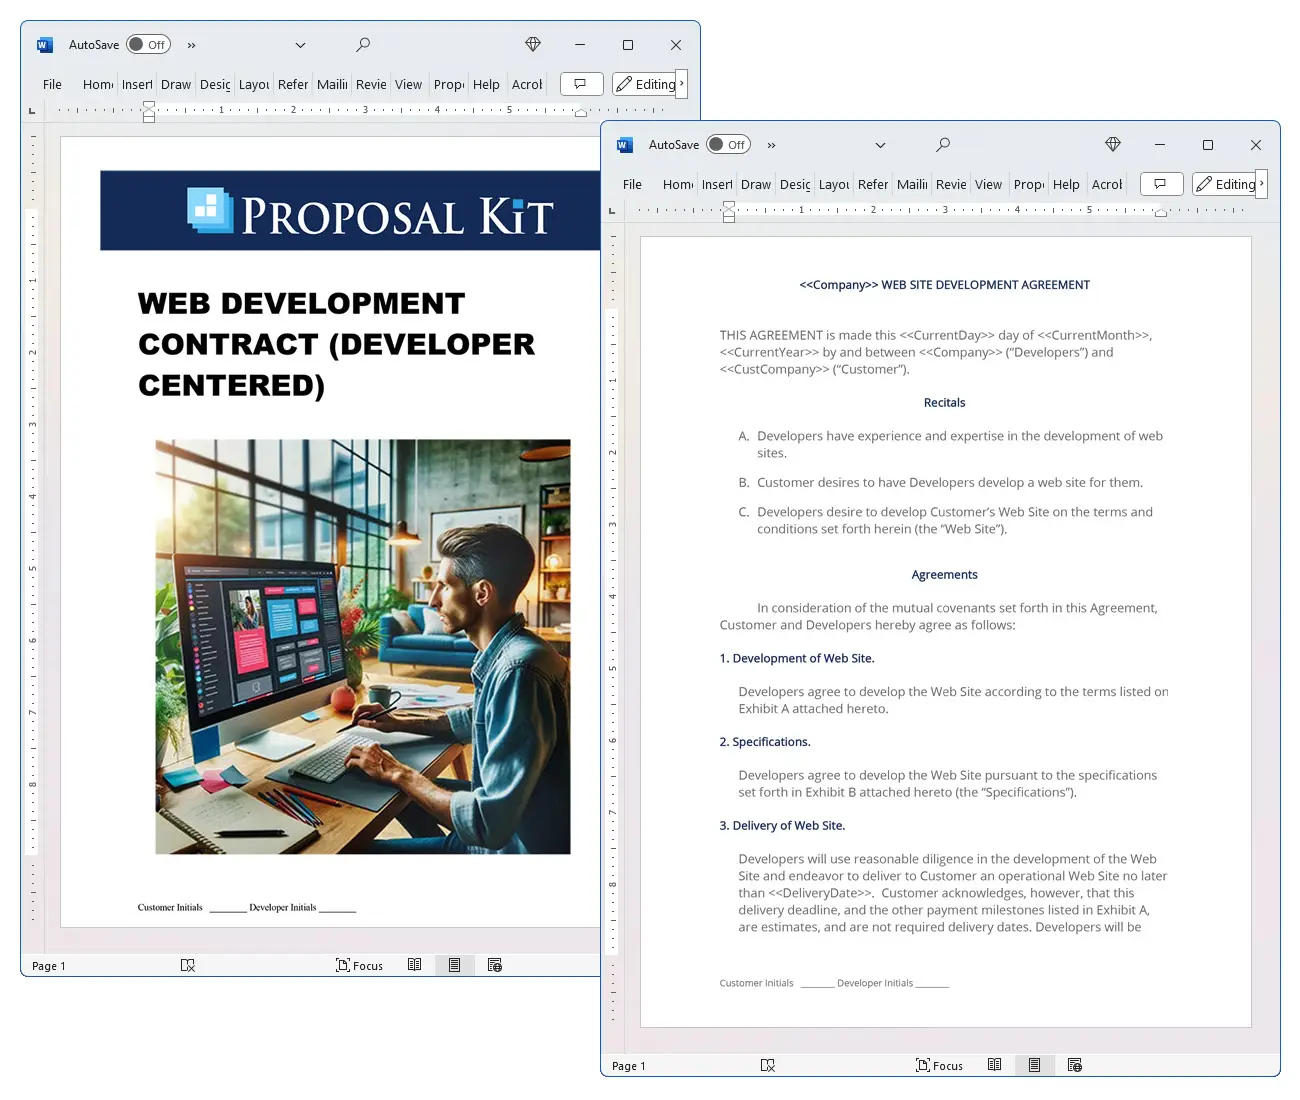 Web Development Contract (Developer Centered) Concepts